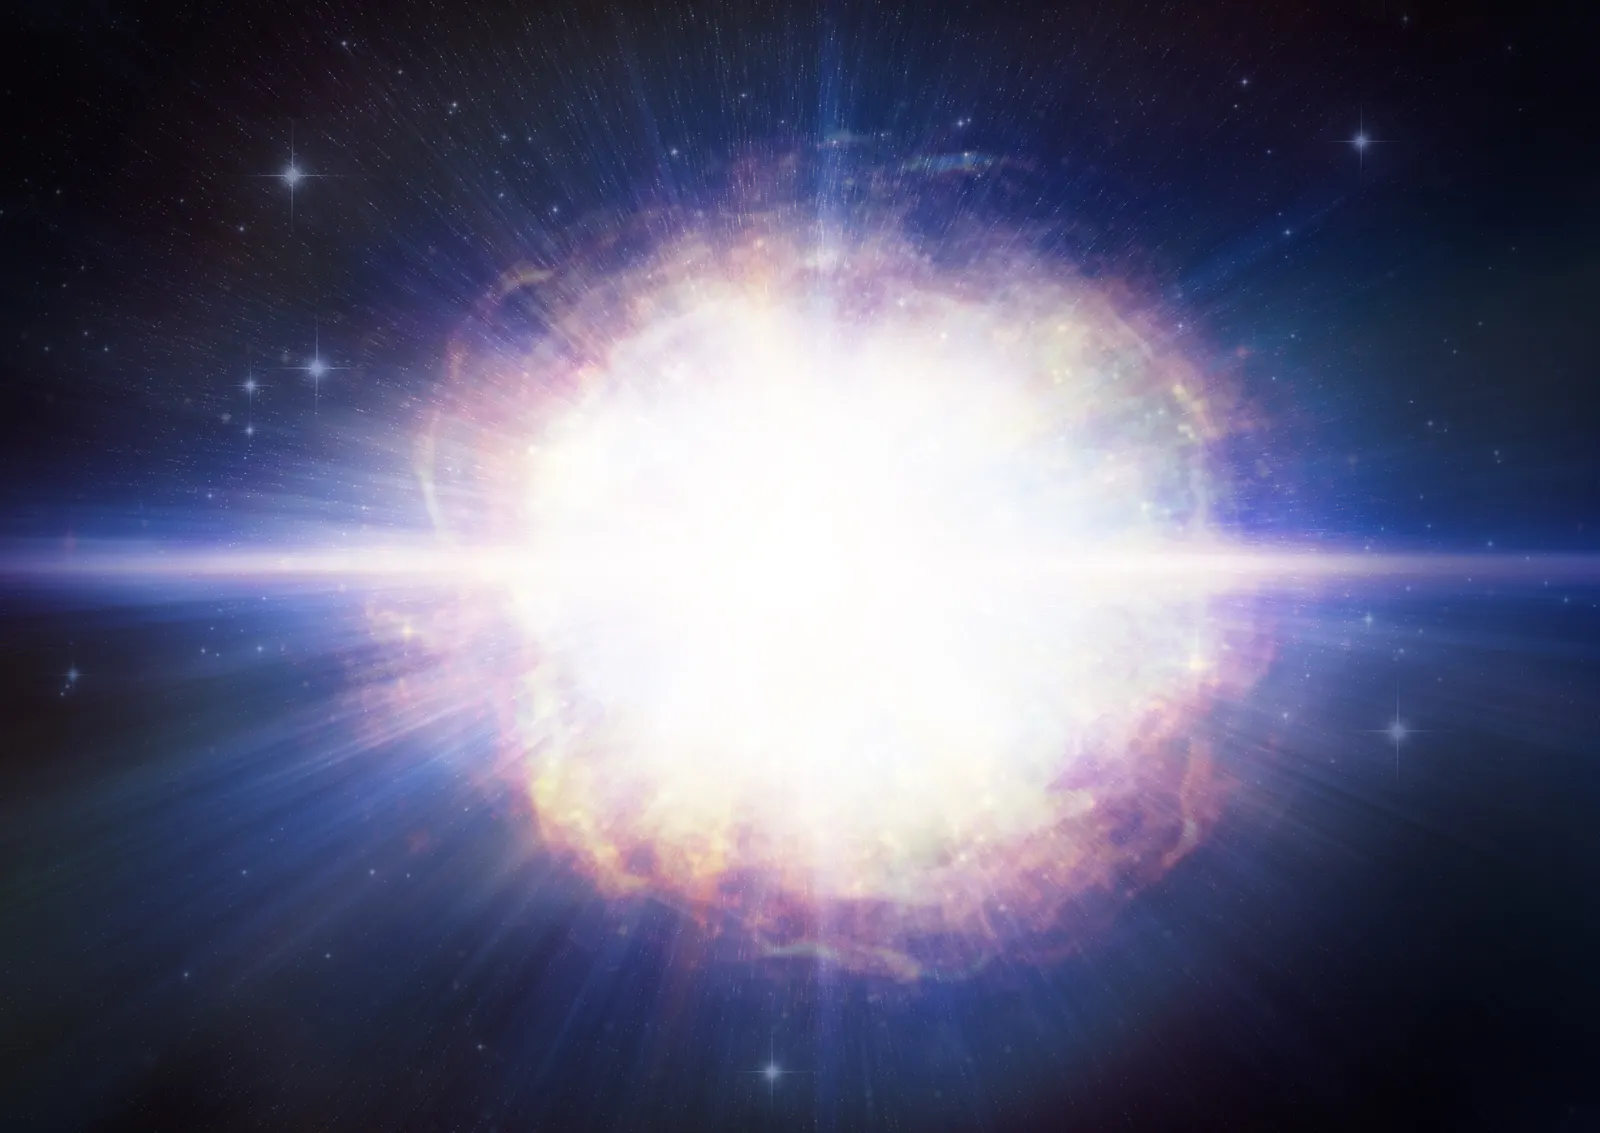 Astronomers Spy Brightest Supernova Ever Seen, Smart News